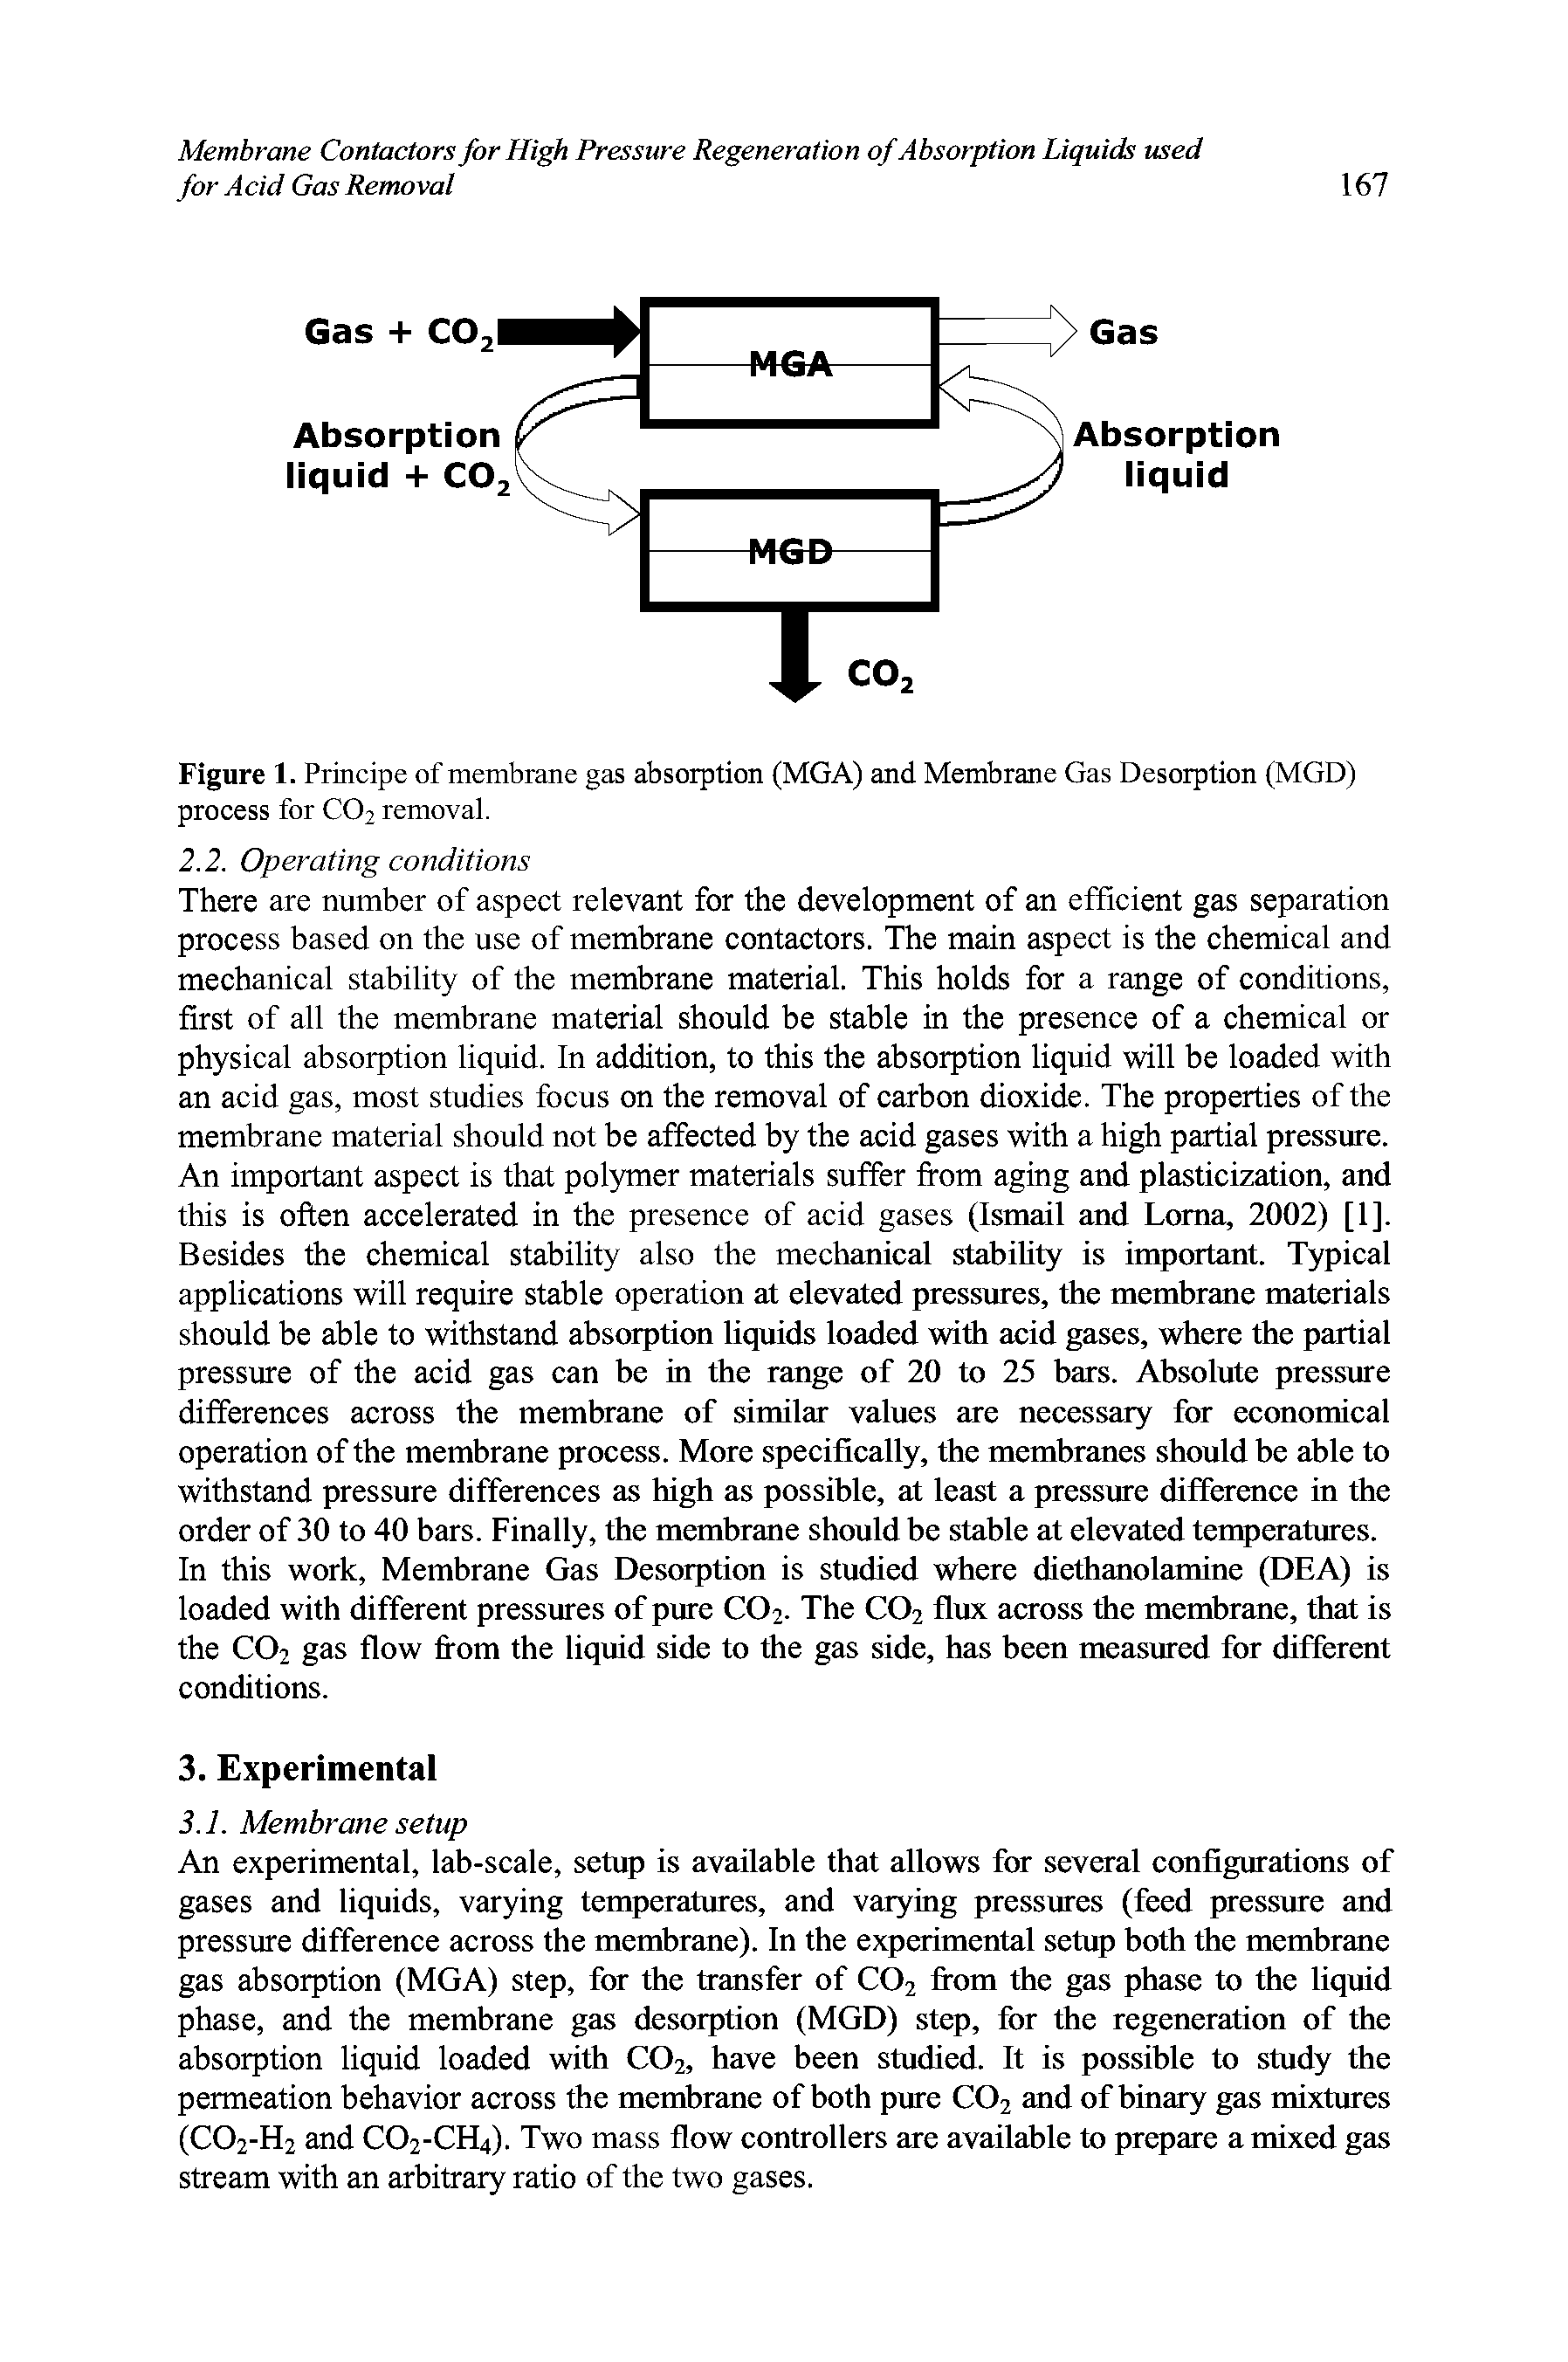 Figure 1. Principe of membrane gas absorption (MGA) and Membrane Gas Desorption (MGD) process for CO2 removal.